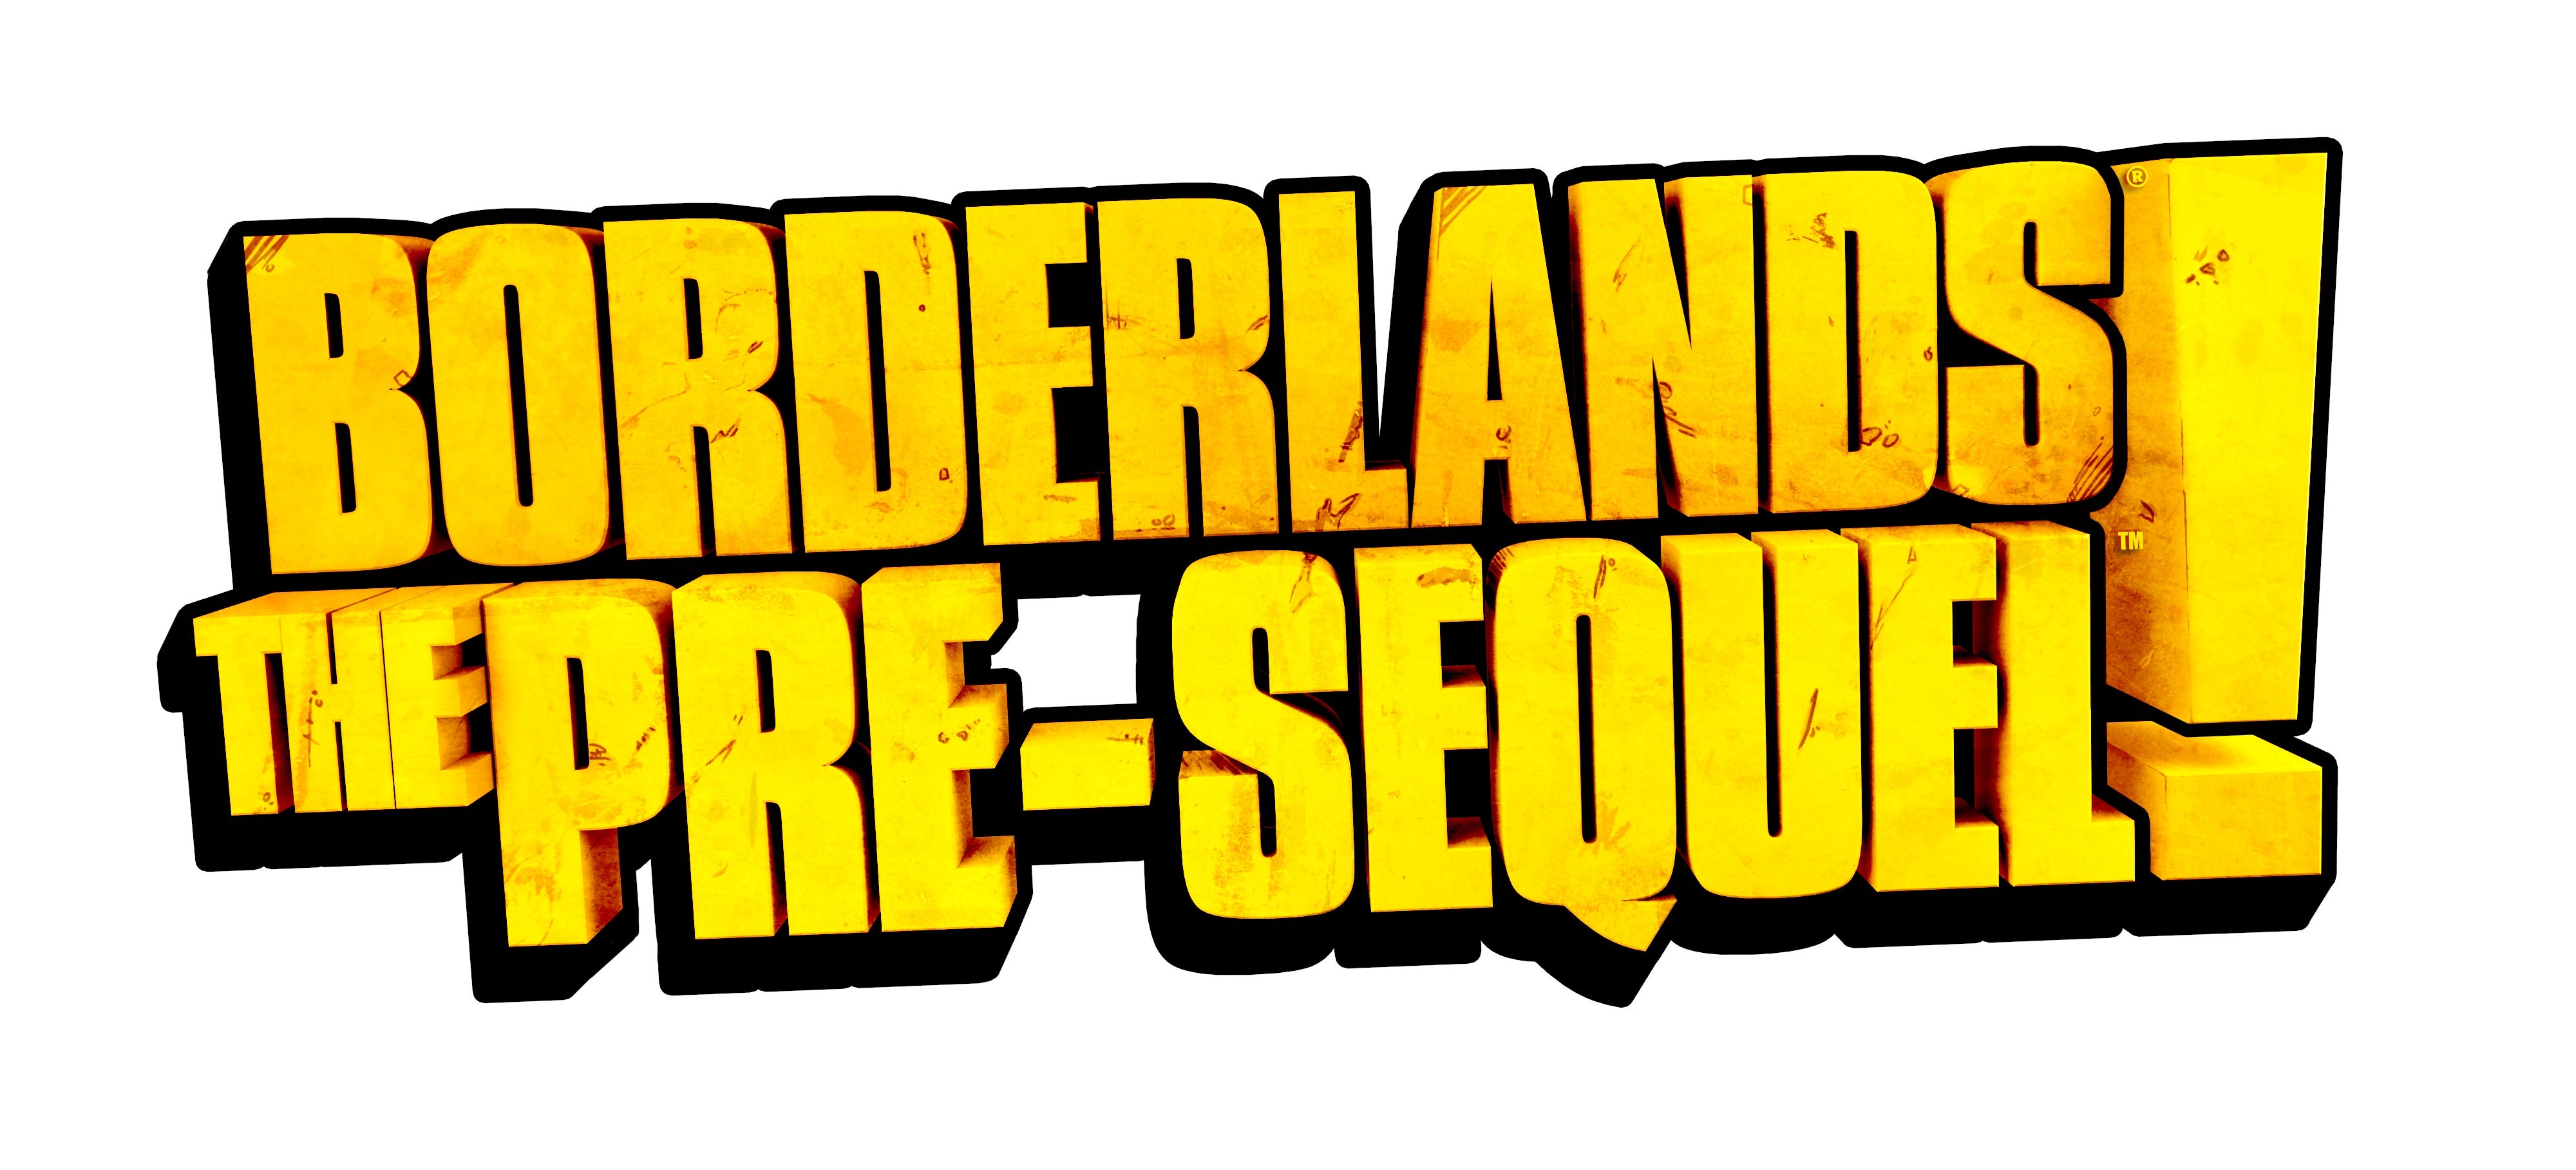 Side Missions – Borderlands the Pre-Sequel Guide